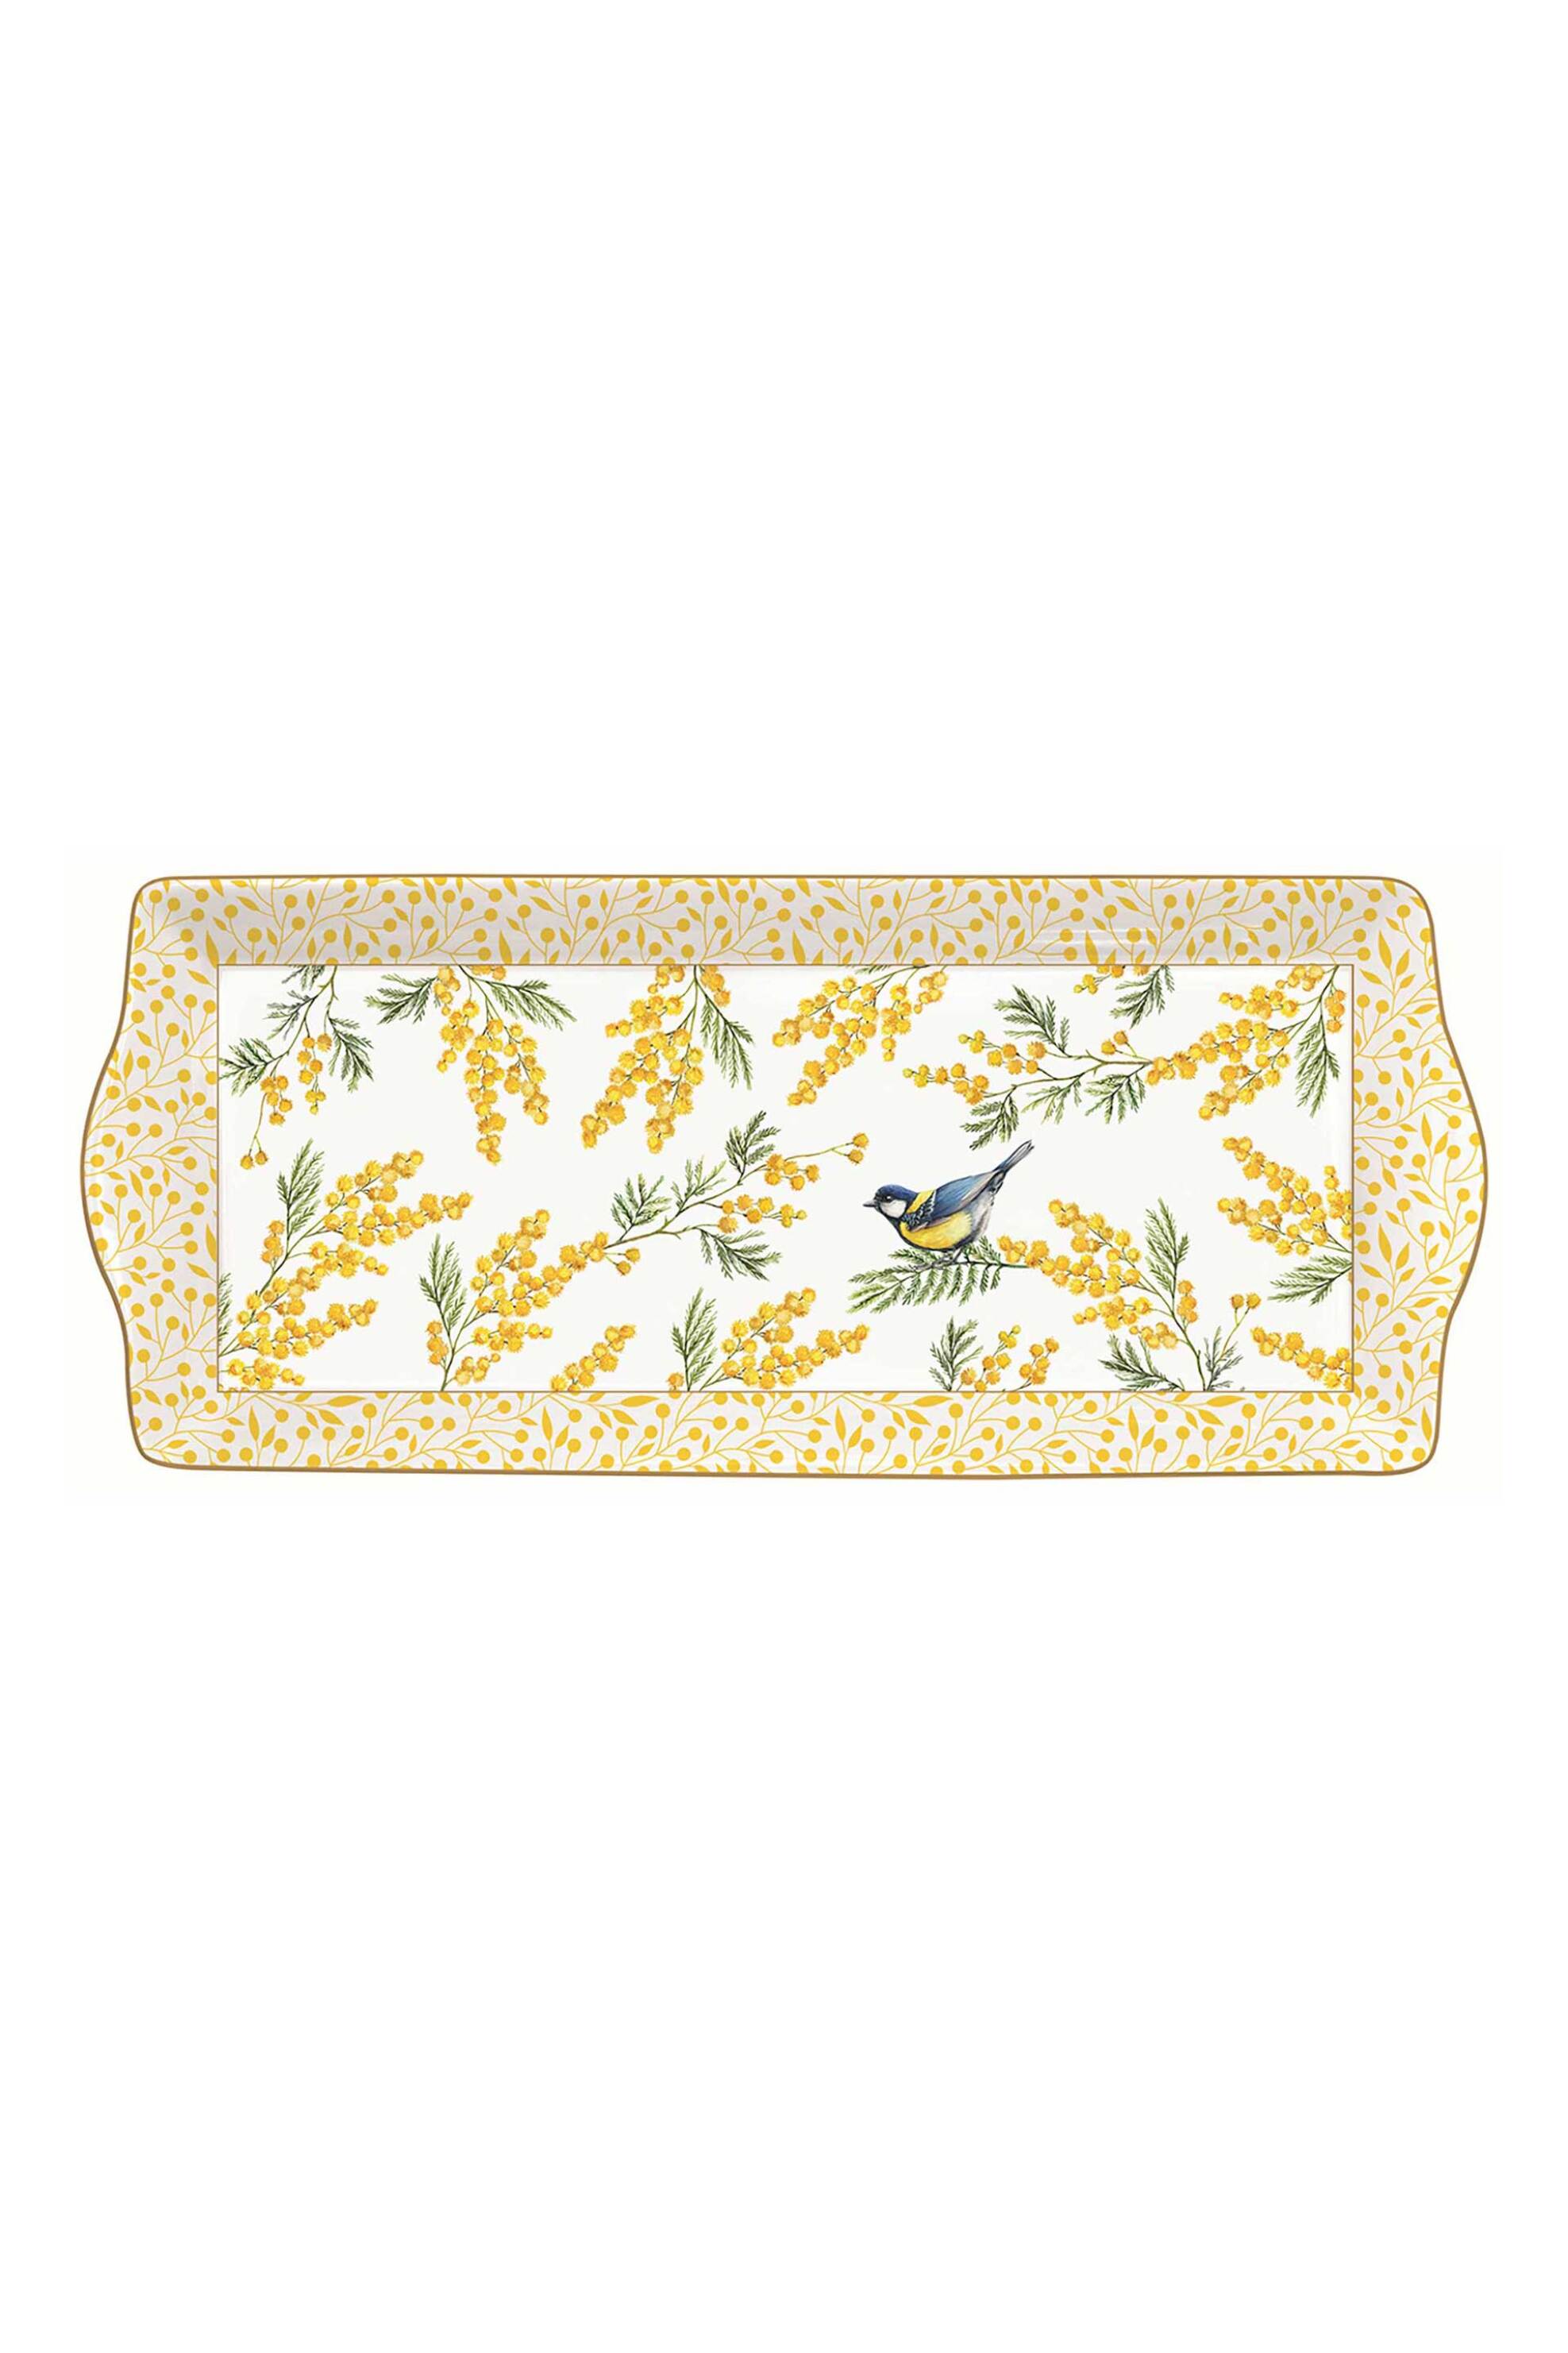 Home > ΚΟΥΖΙΝΑ > Είδη Σερβιρίσματος DOMUS HOMUS πορσελάνινη πιατέλα σερβιρίσματος με κίτρινα λουλούδια και μπλε πουλί "Mimosa" 35 x 15 cm - 20-07-219